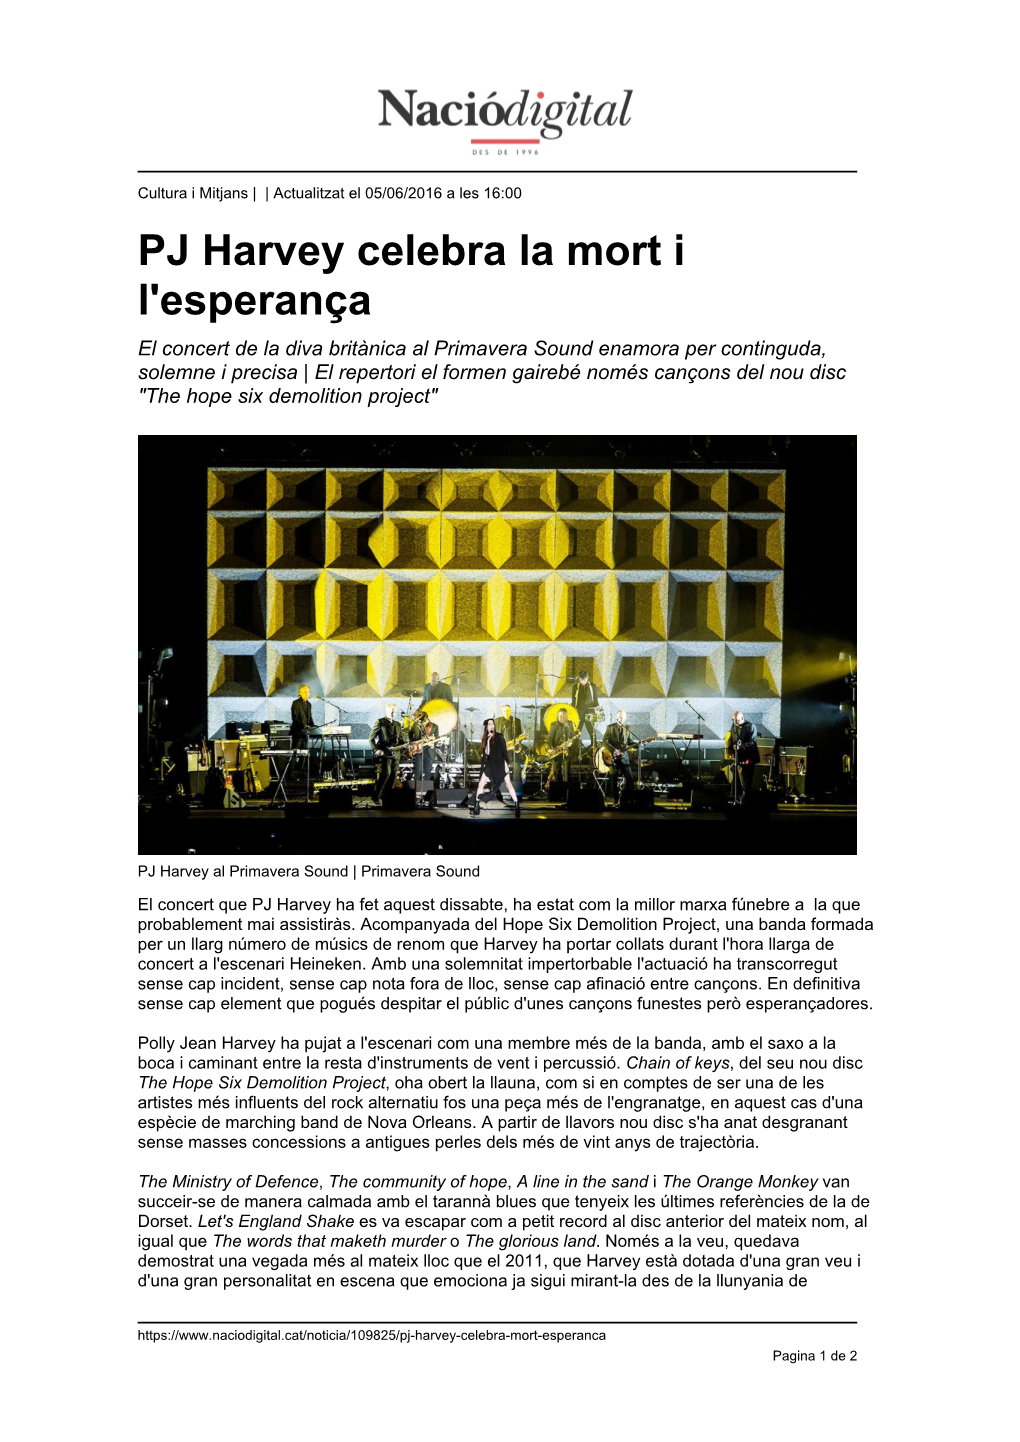 PJ Harvey Celebra La Mort I L'esperança